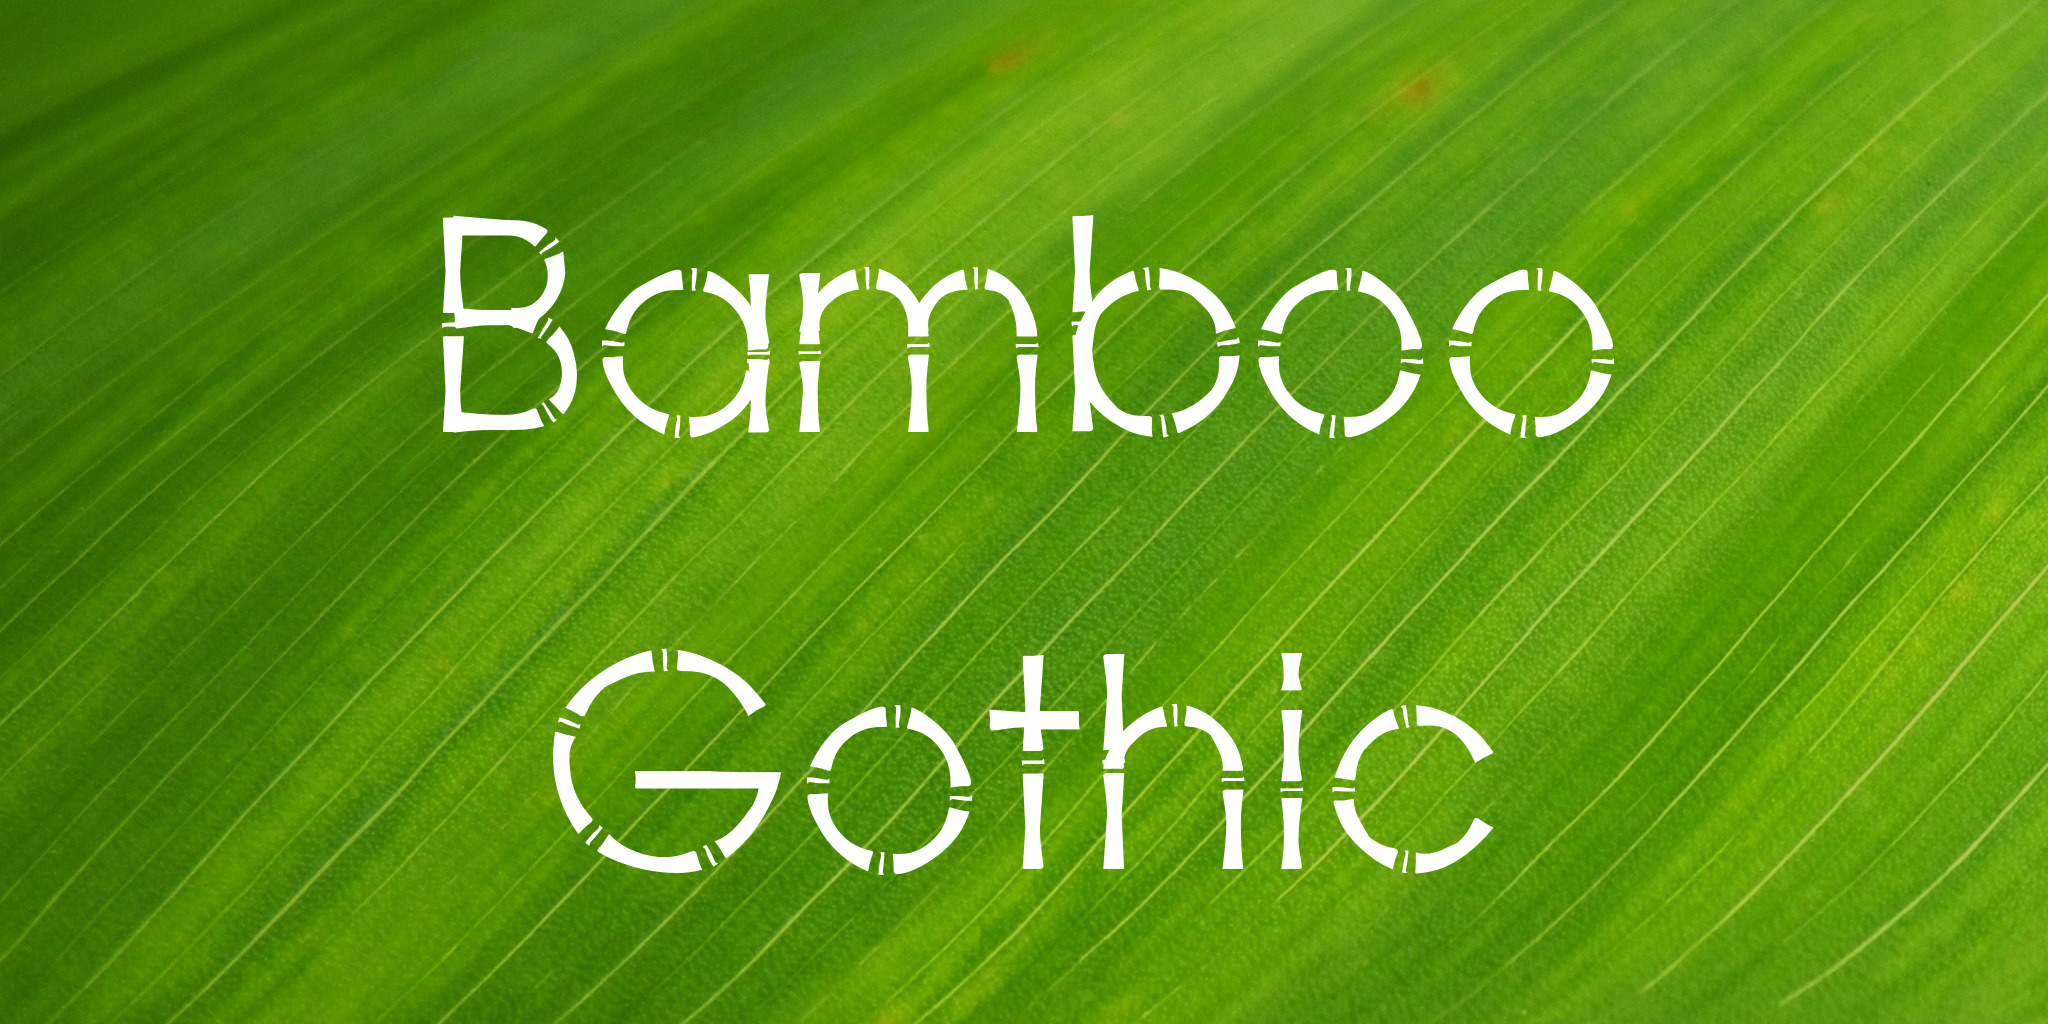 Bamboo Gothic